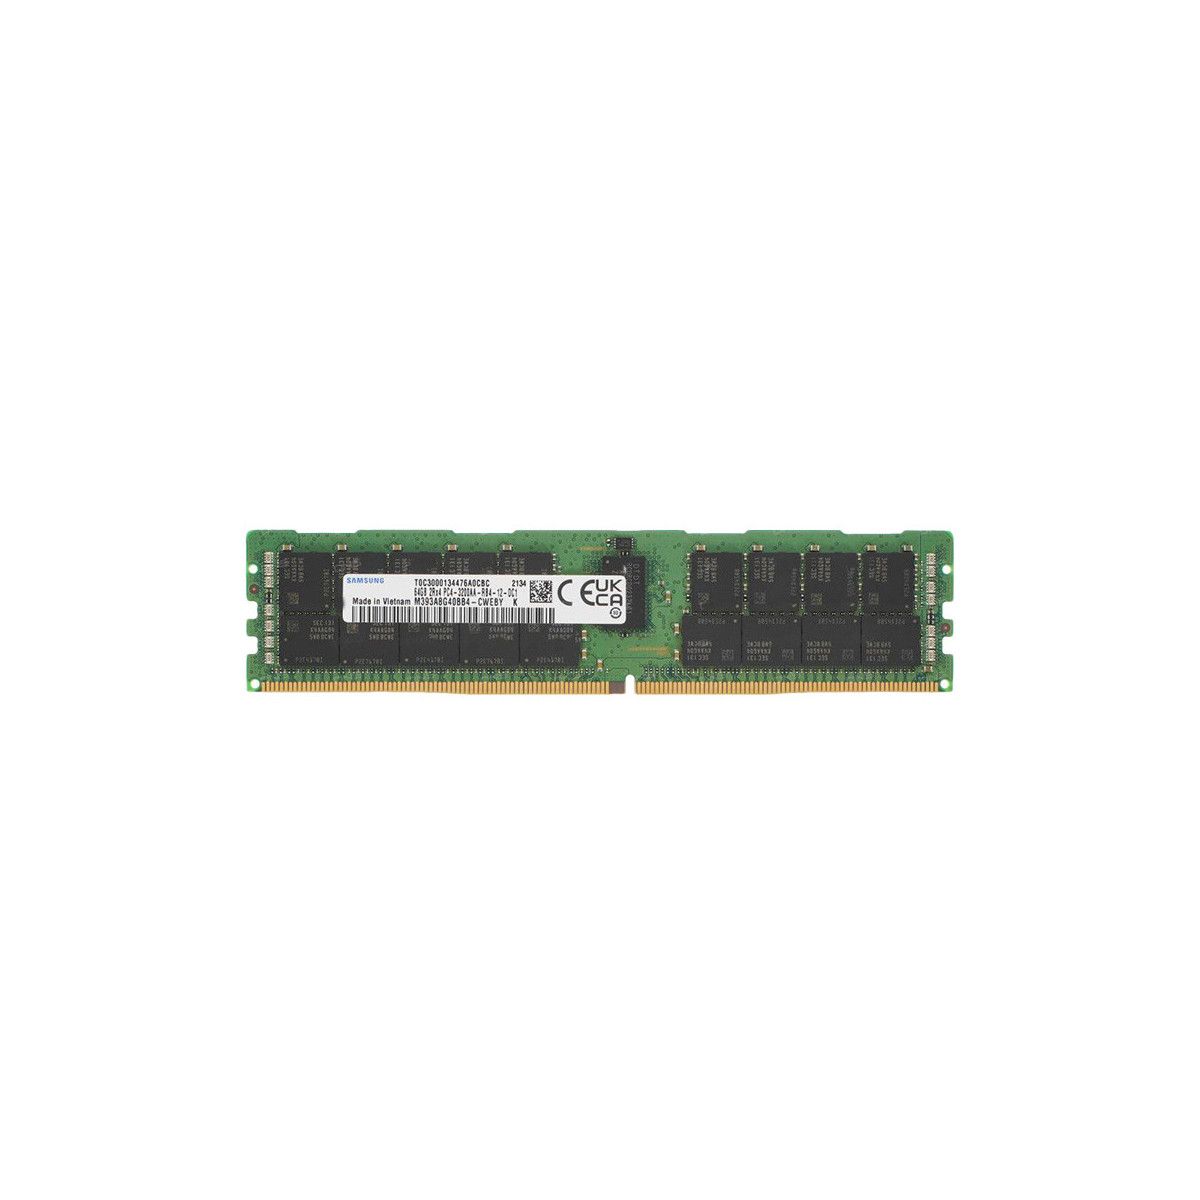 P07650-K21-MS - Memstar 1x 64GB DDR4-3200 RDIMM PC4-25600R - Mem-star Compatible OEM Mémoire 1 - Memstar 